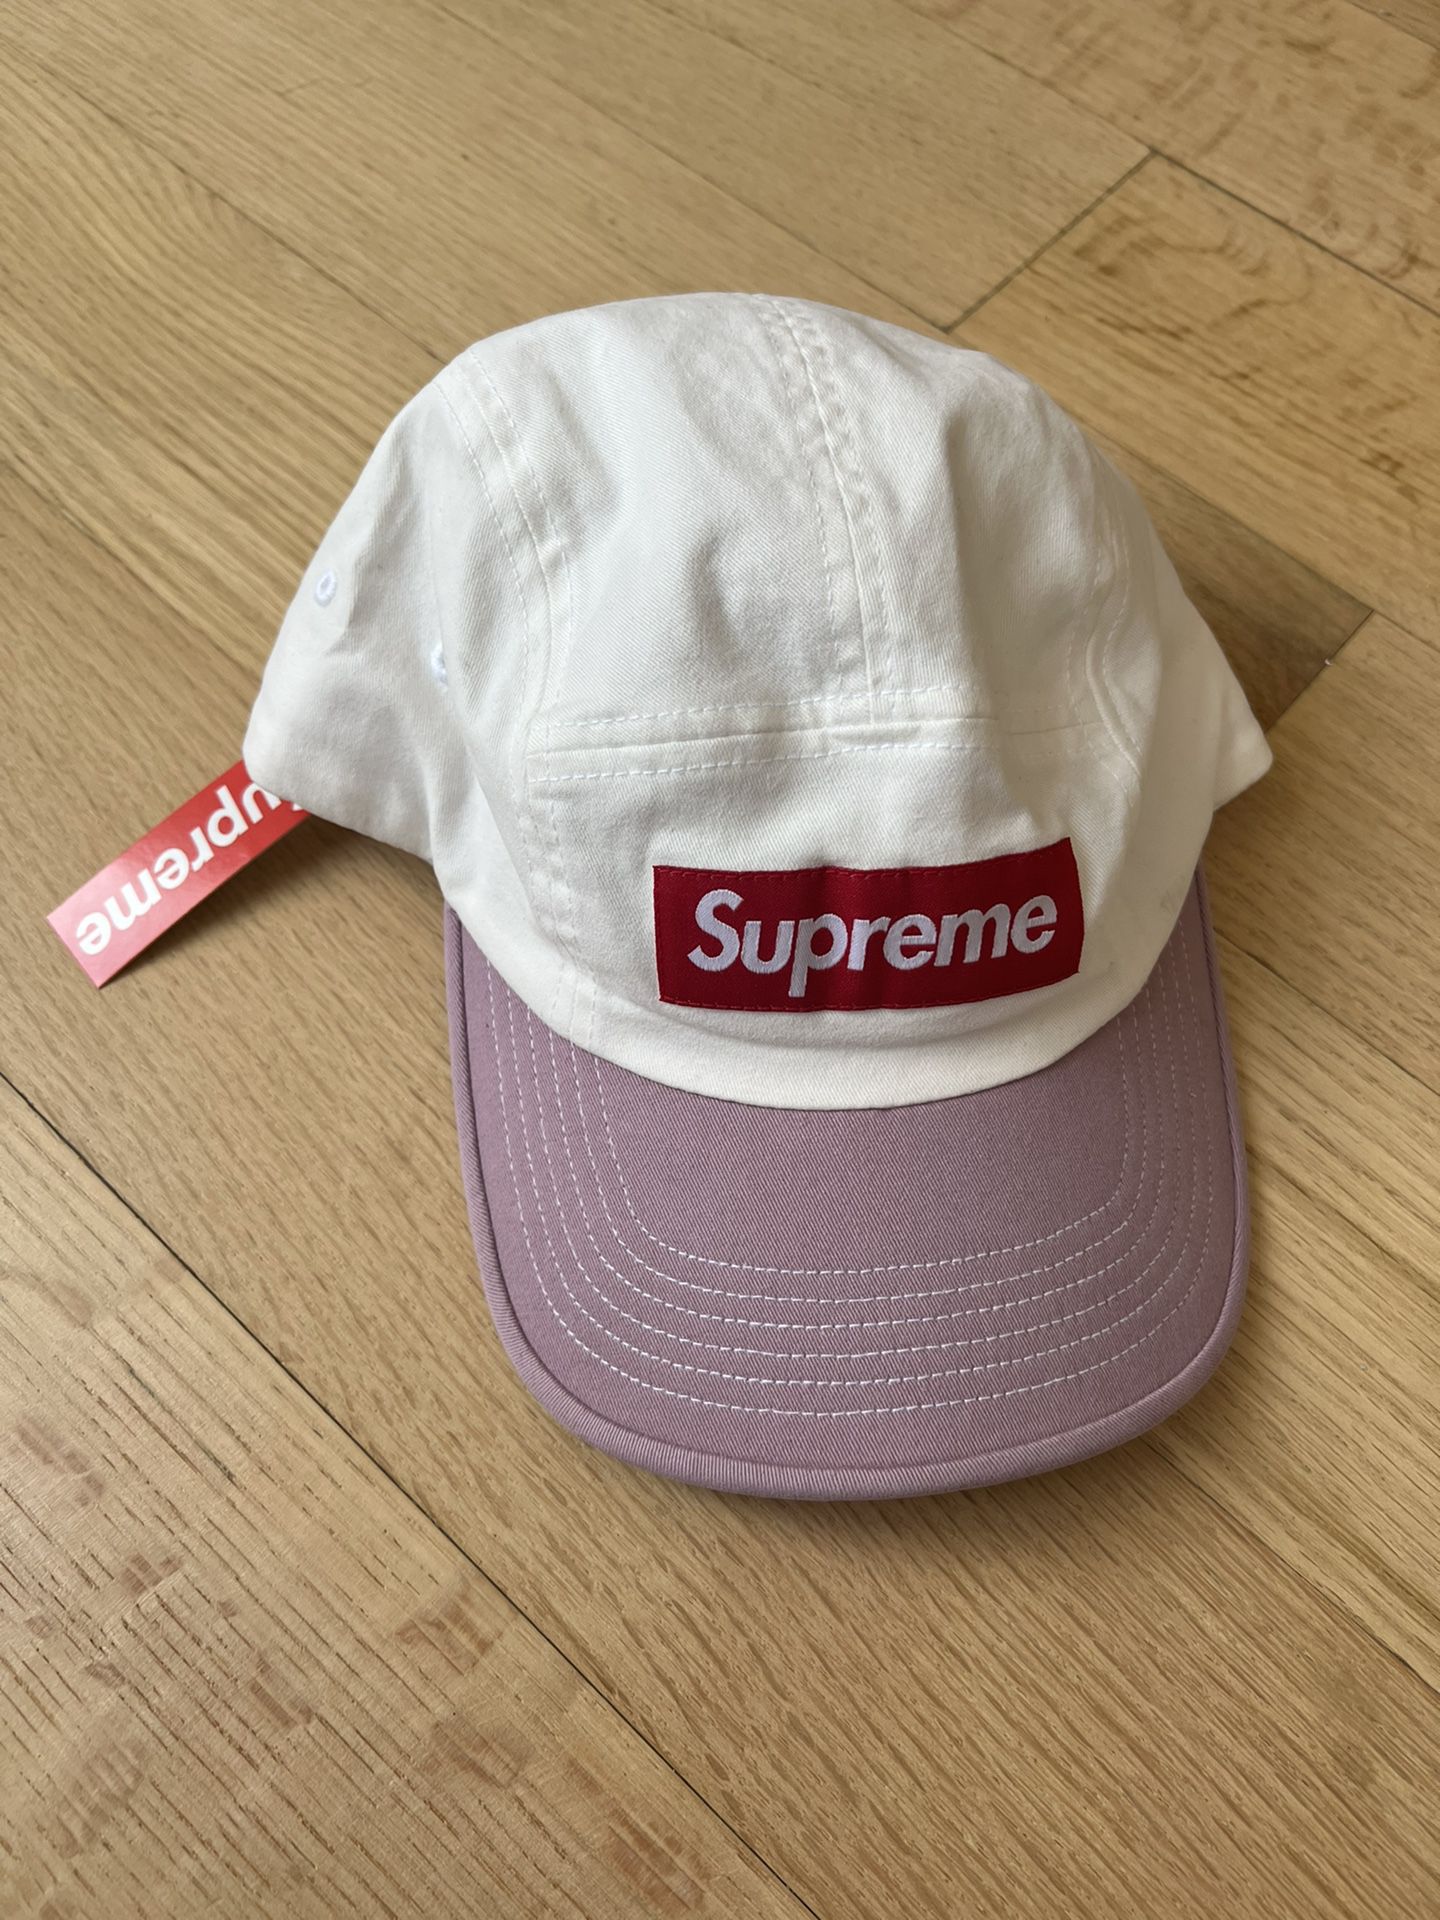 Supreme Hat - New